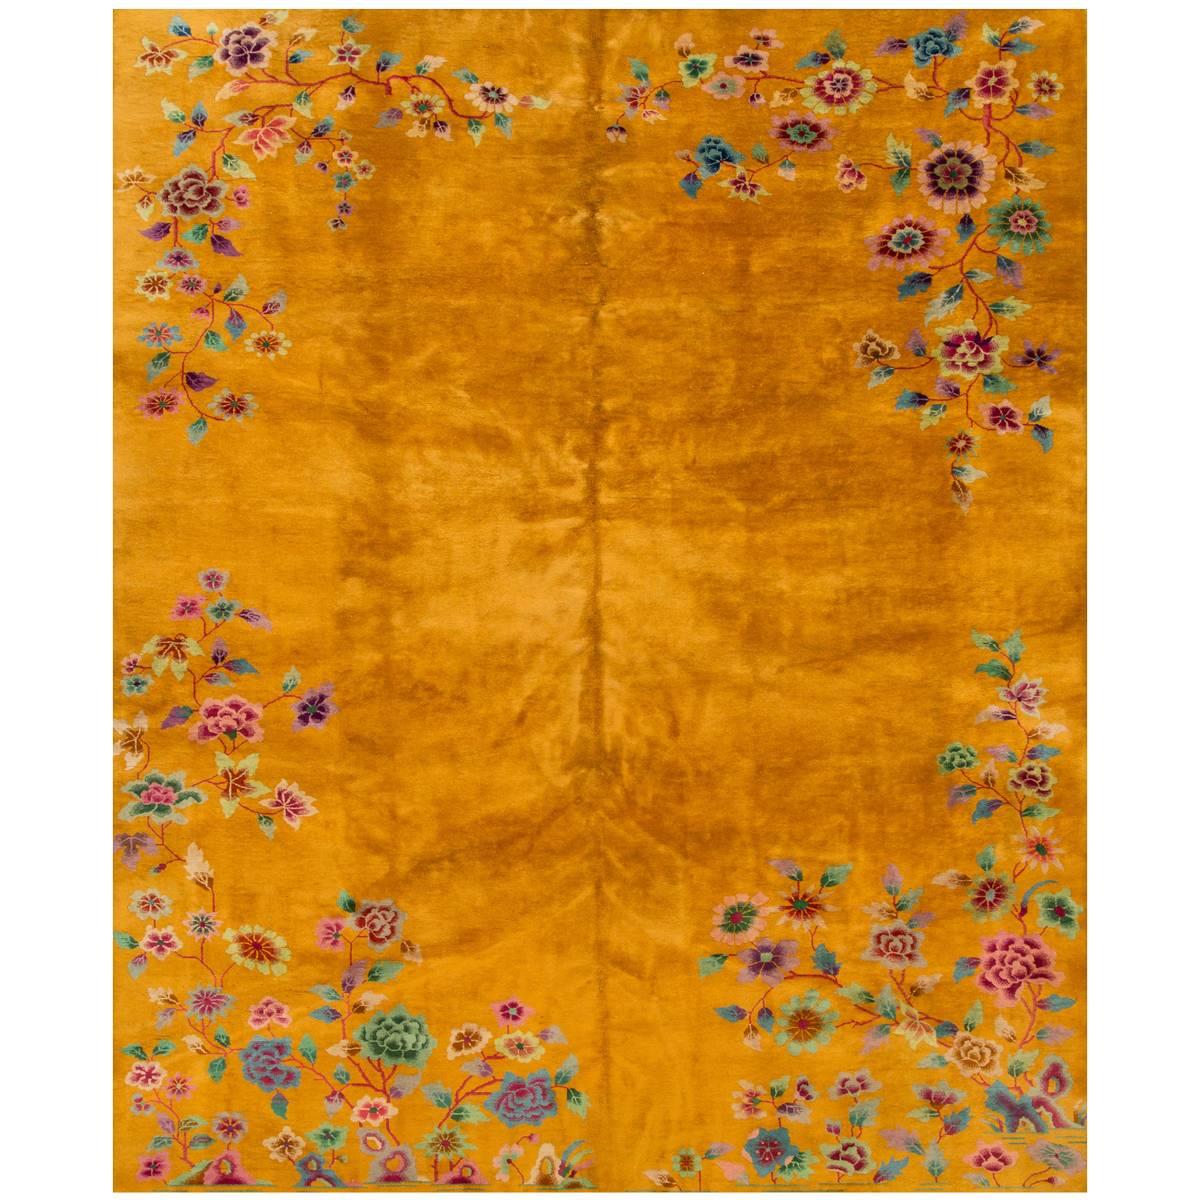 Early 20th Century Yellow/Gold Chinese Nichols Carpet